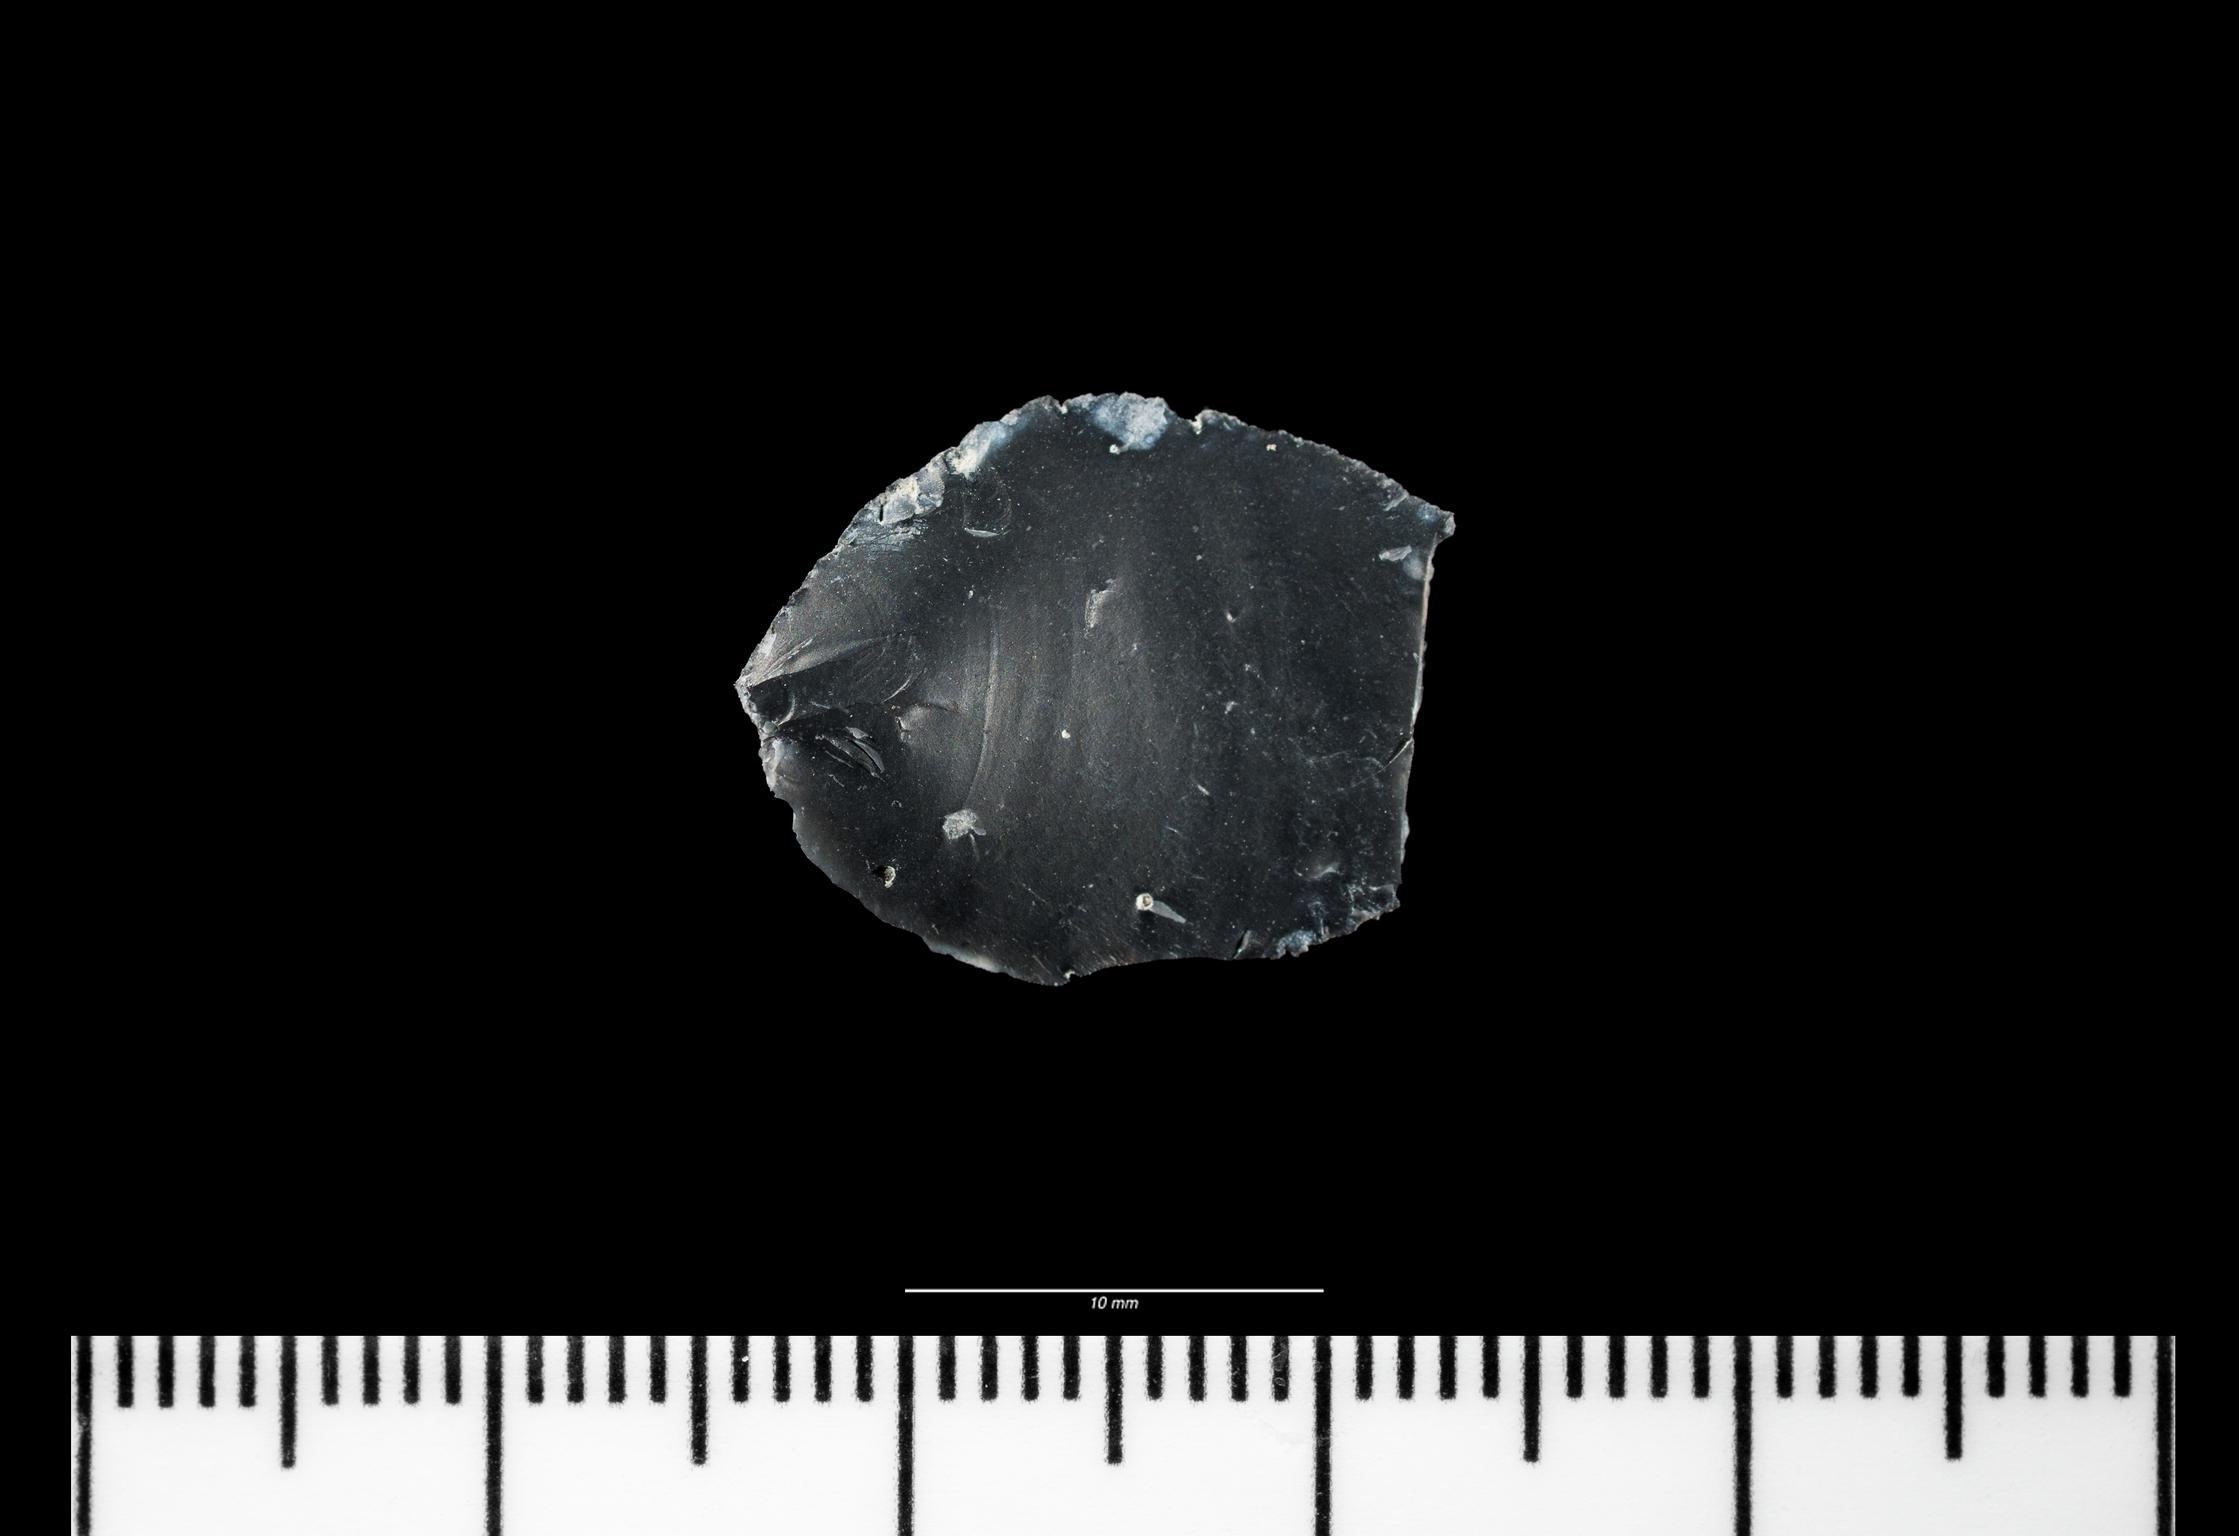 Mesolithic flint flake